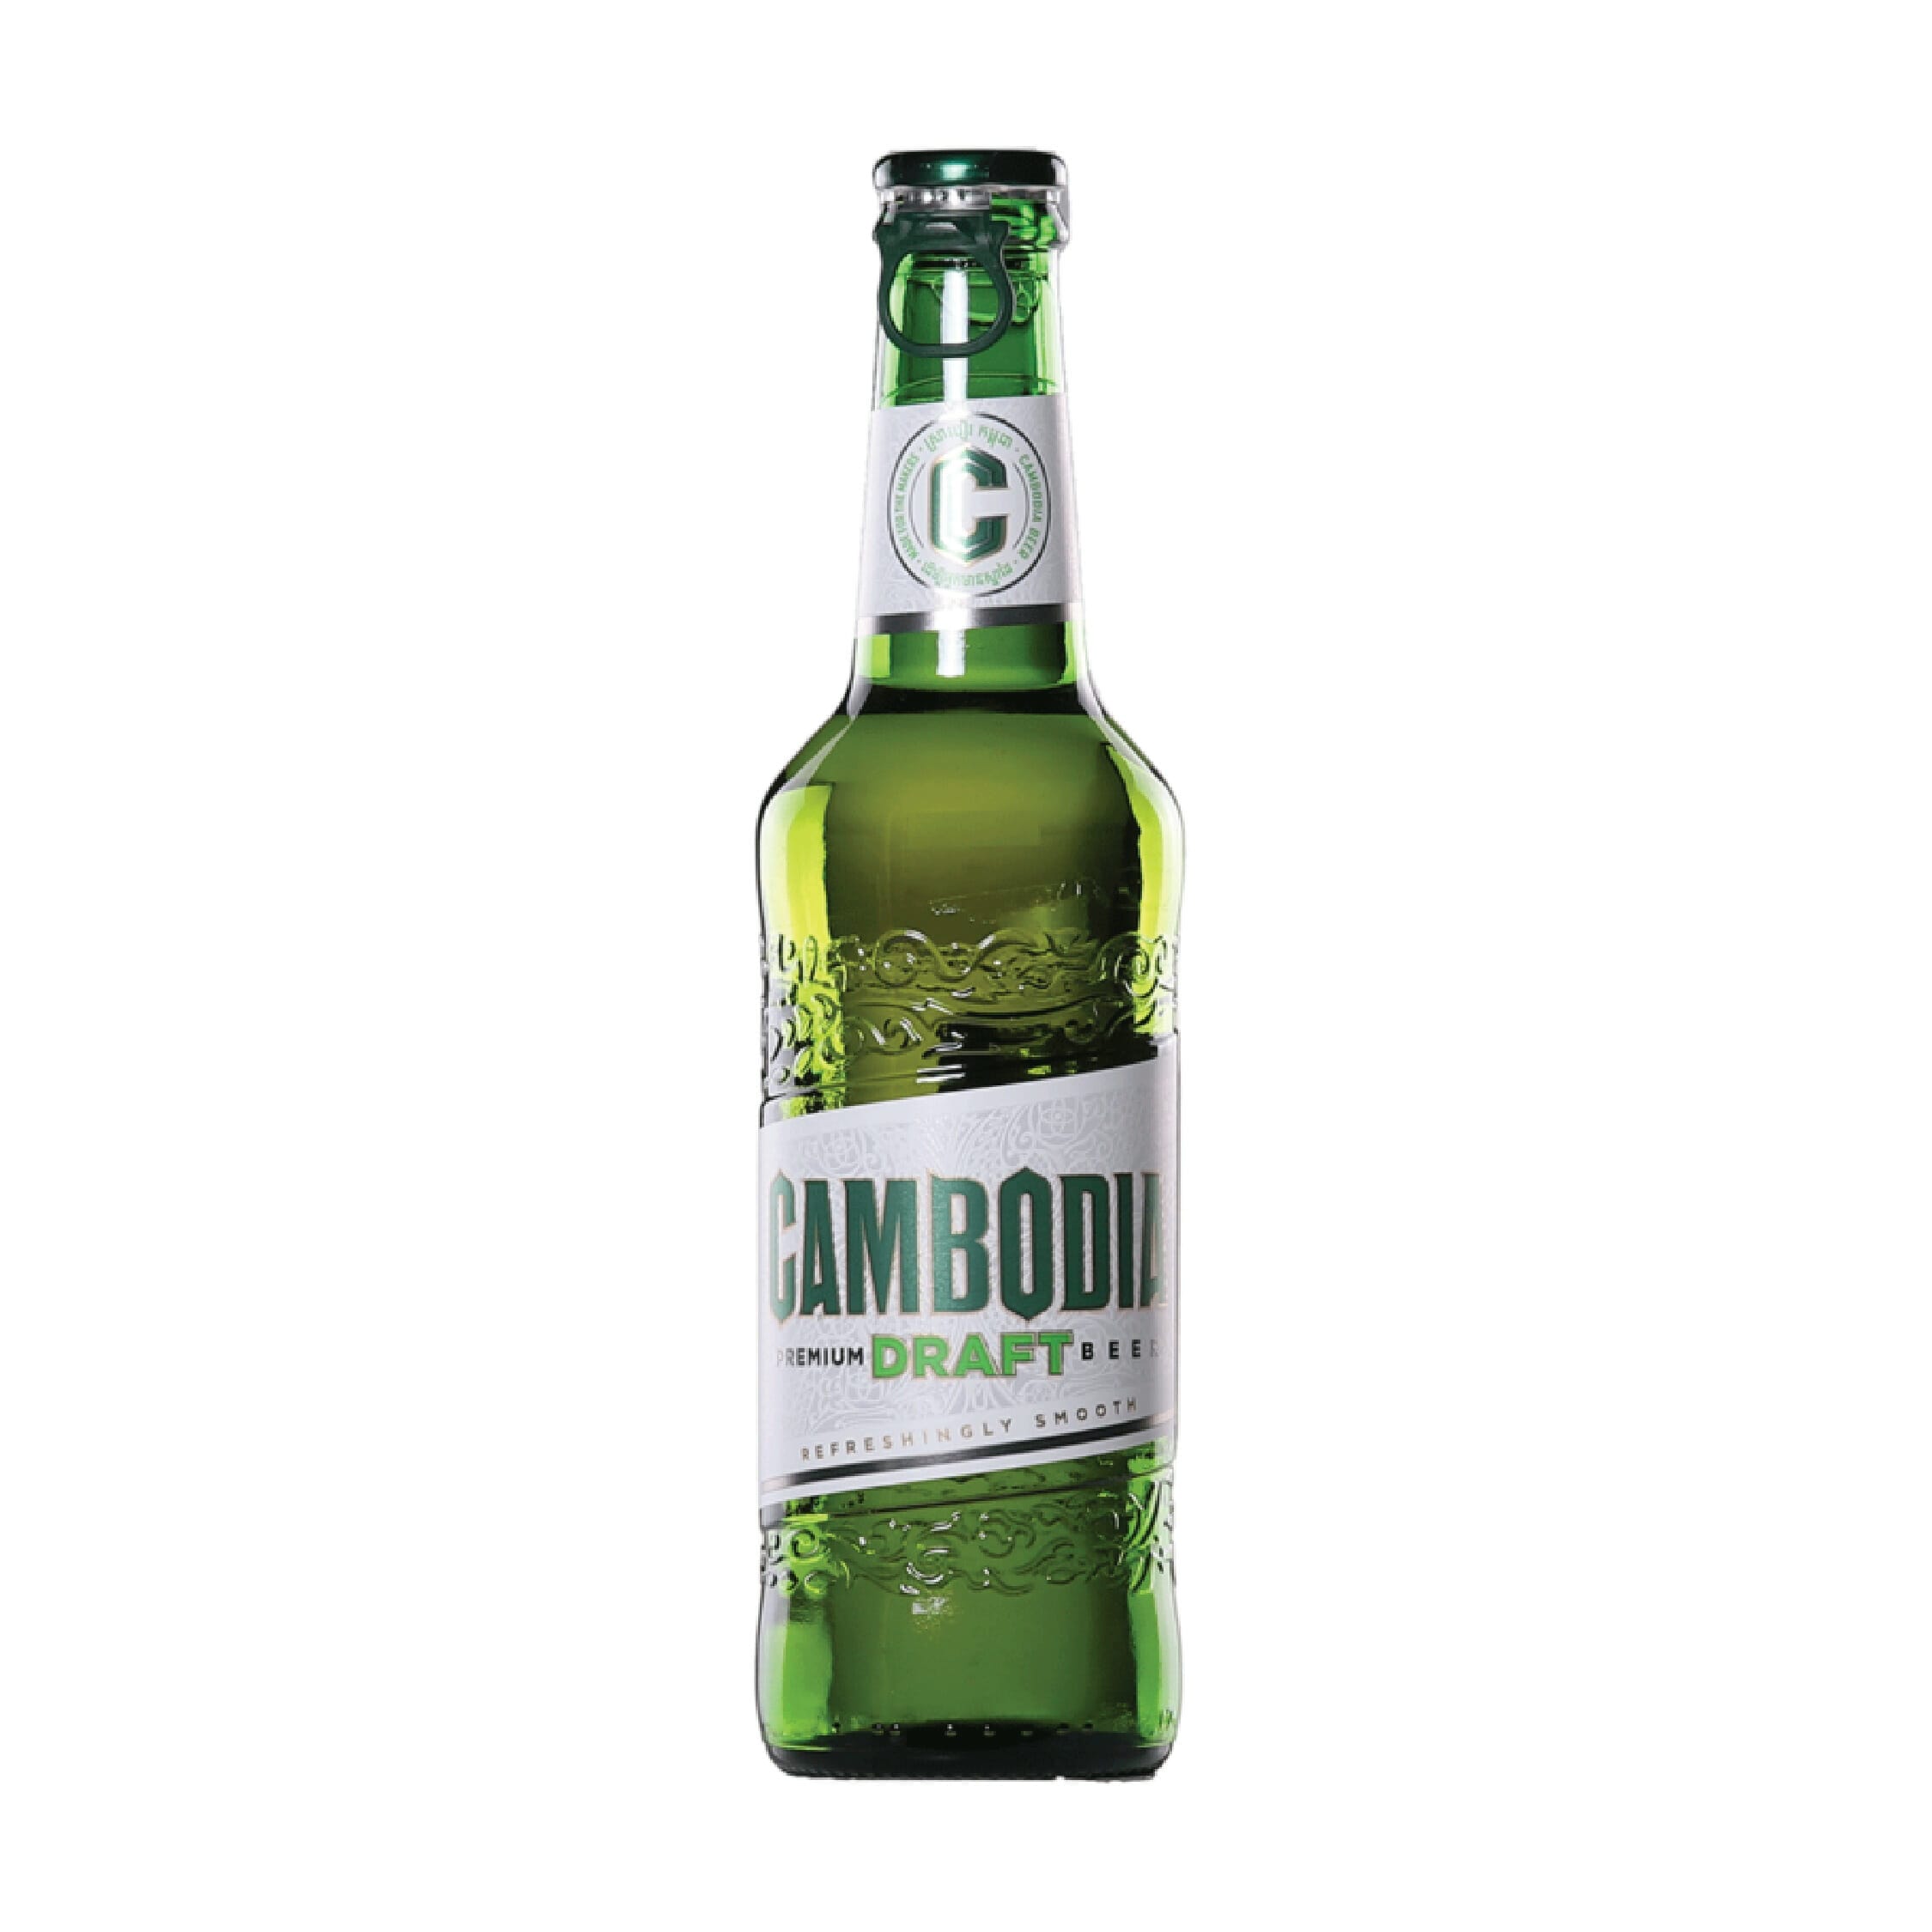 Cambodia Premium Draft Beer Bottle 330ml